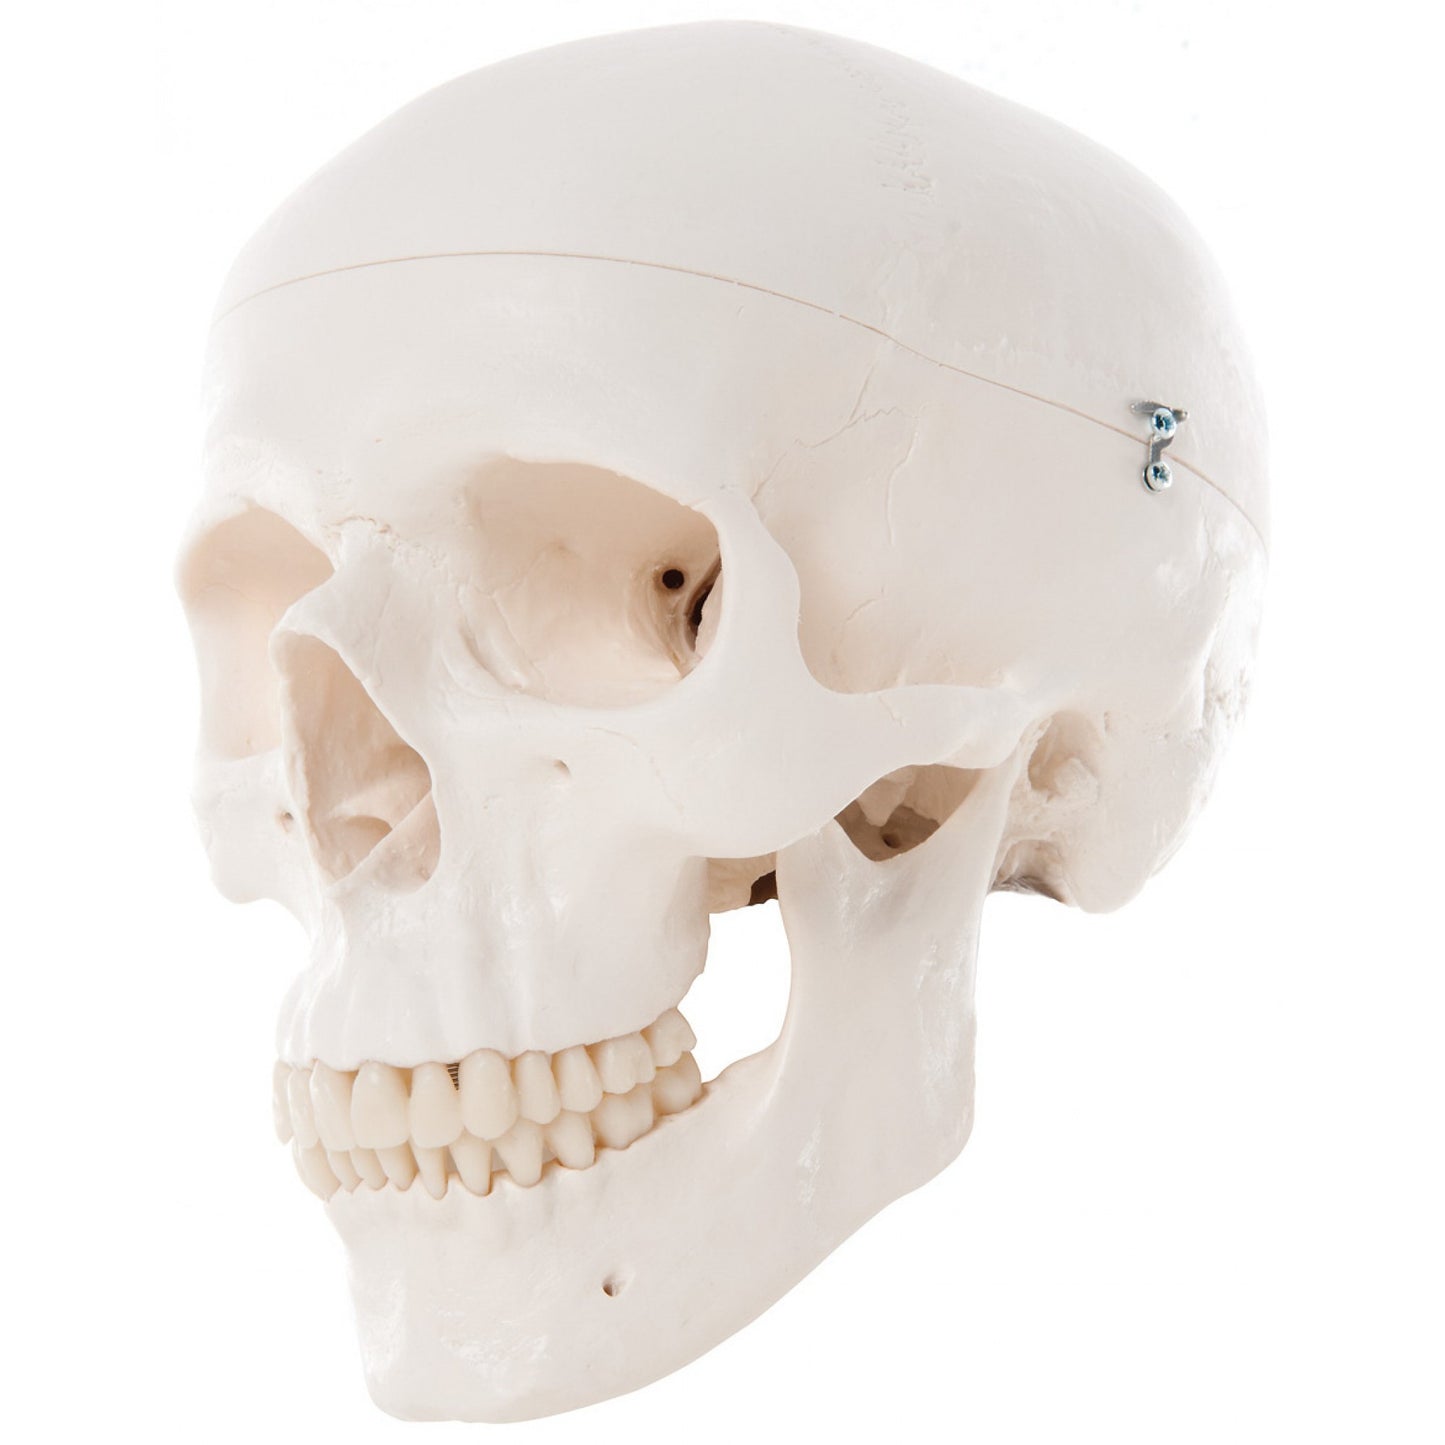 A20 Classic Human Skull Model, 3 part - 3B Smart Anatomy